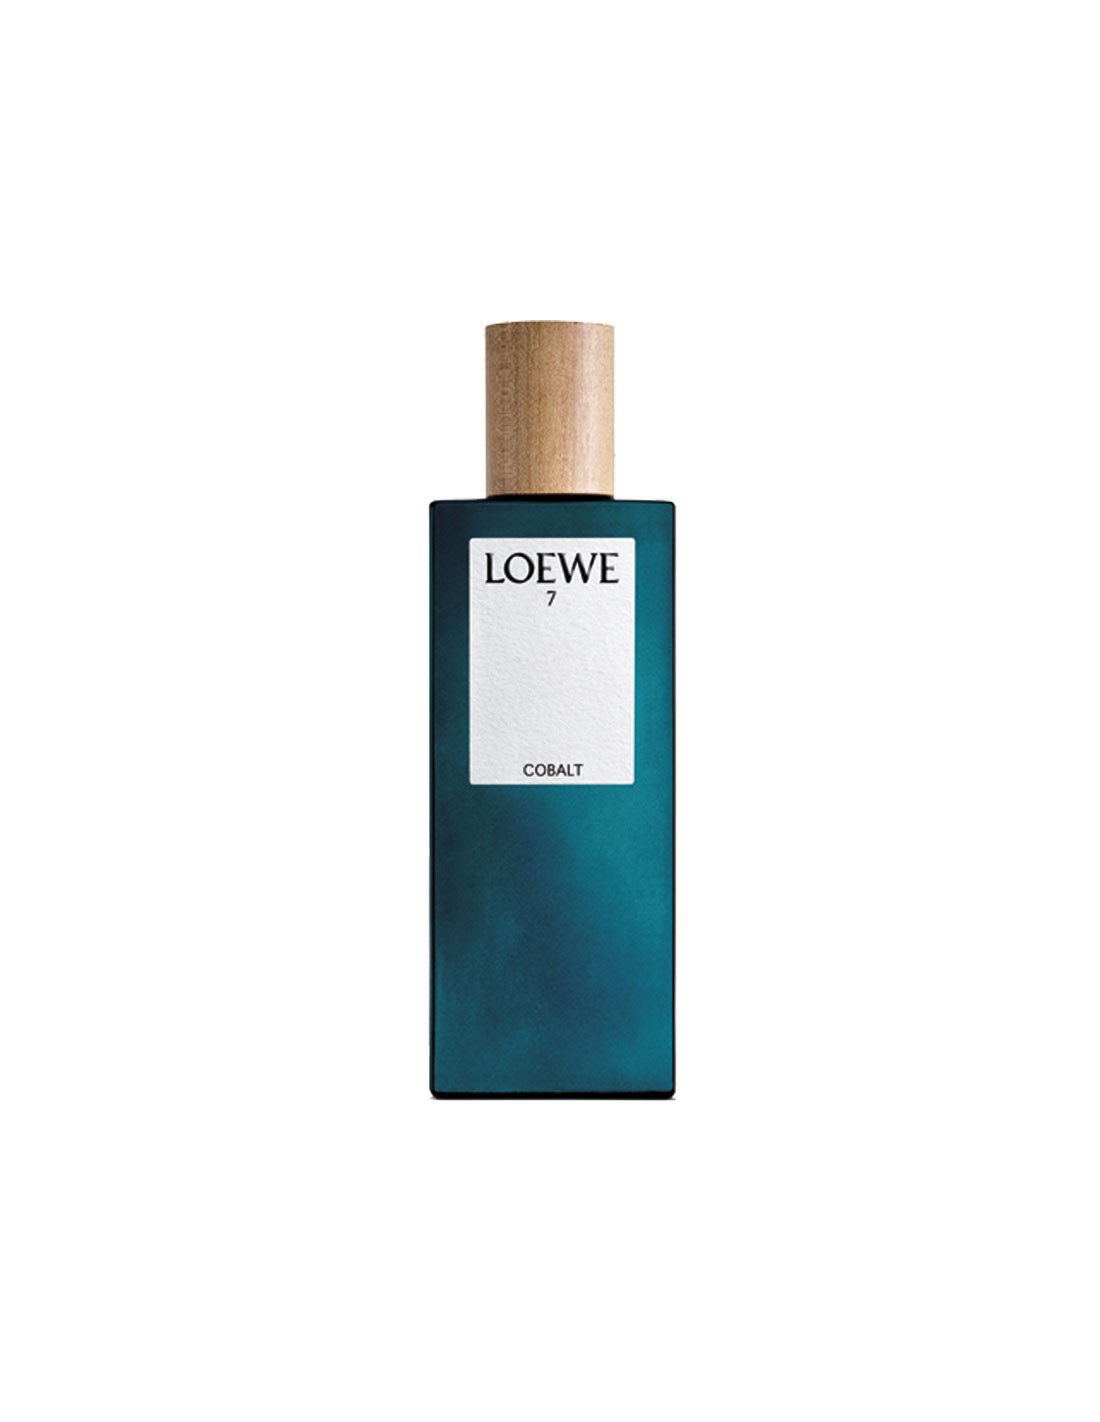 Loewe 7 Cobalto Eau De Parfum Spray 100ml